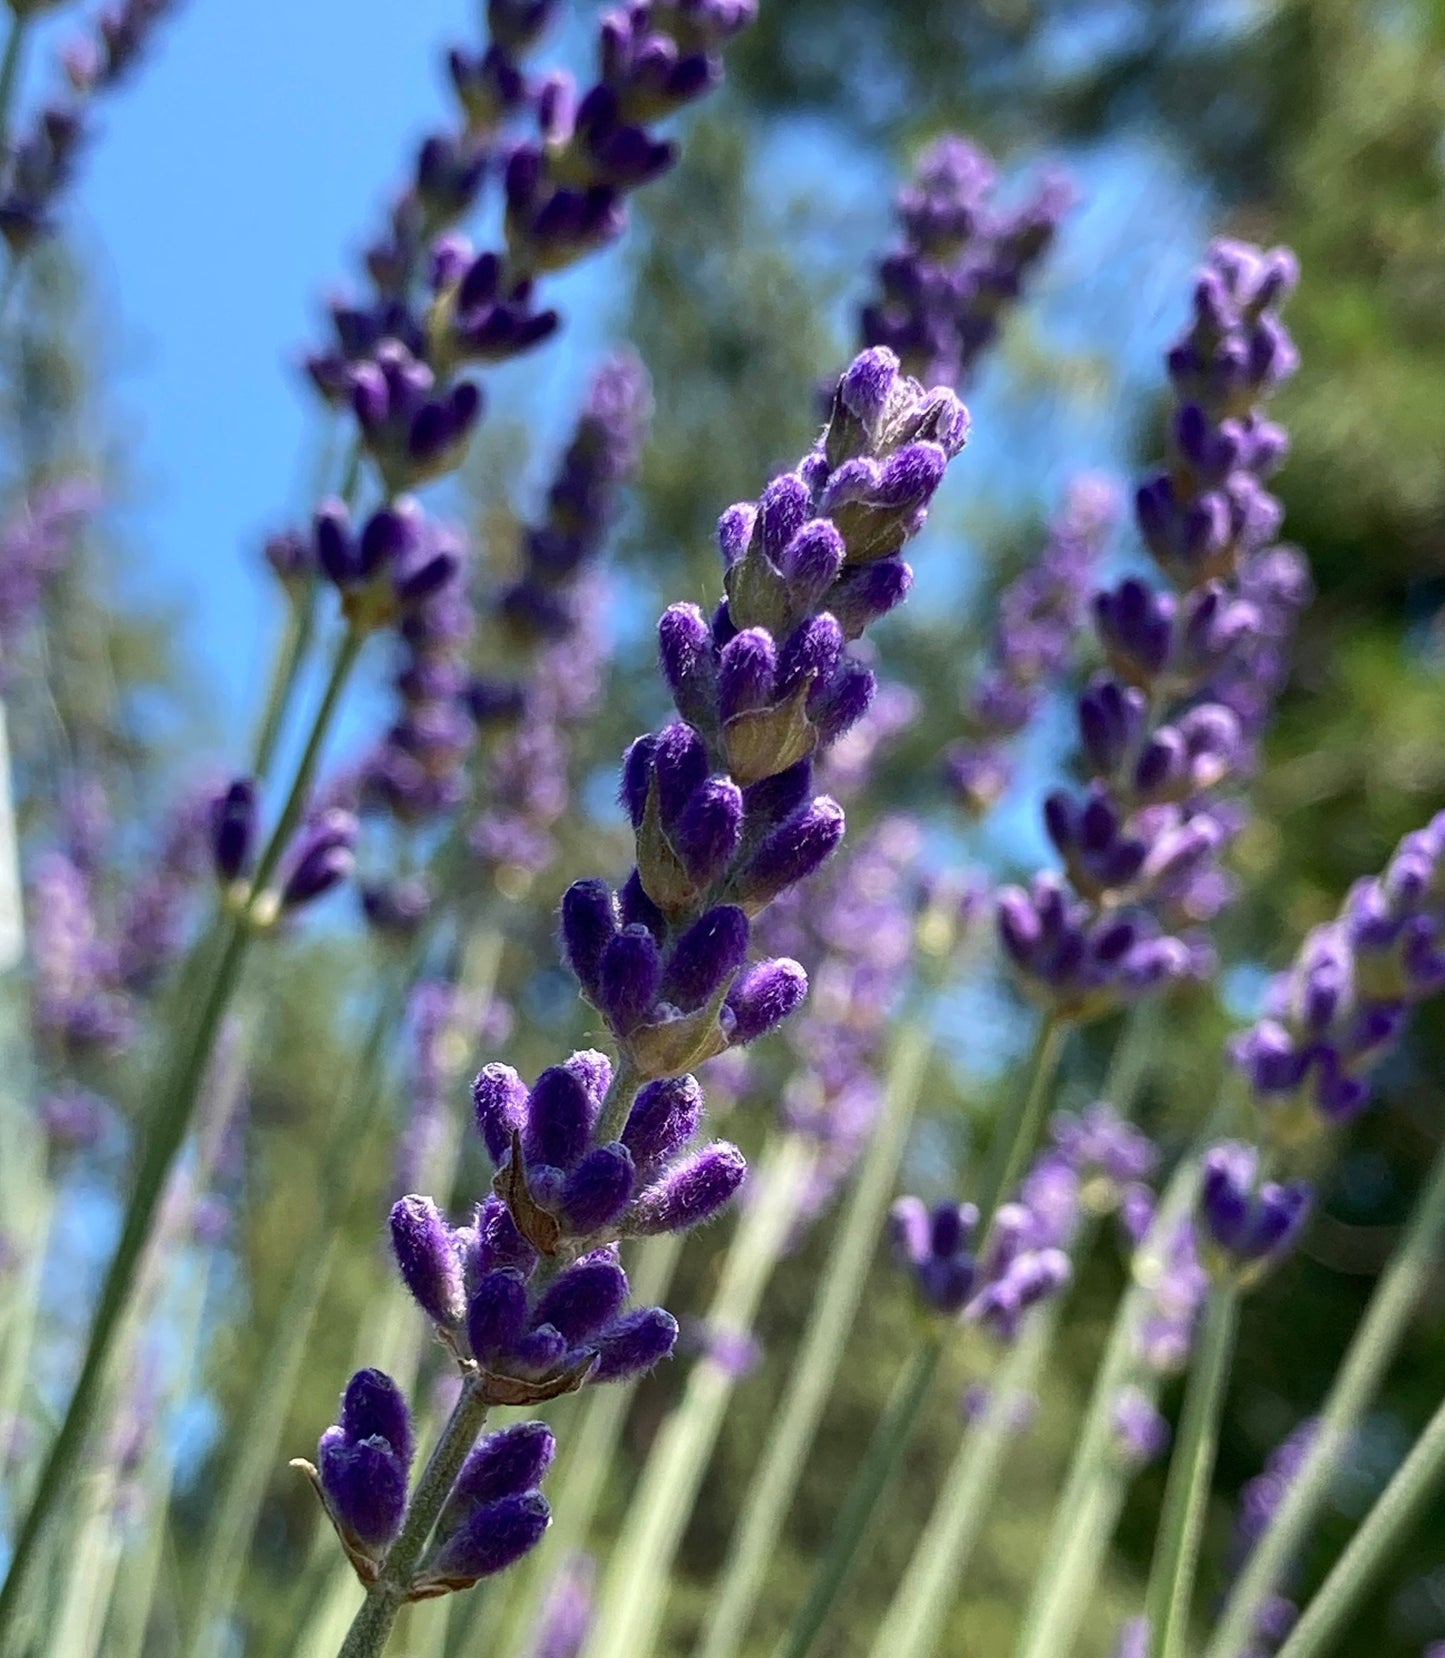 Elizabeth Lavender stem pre-bloom